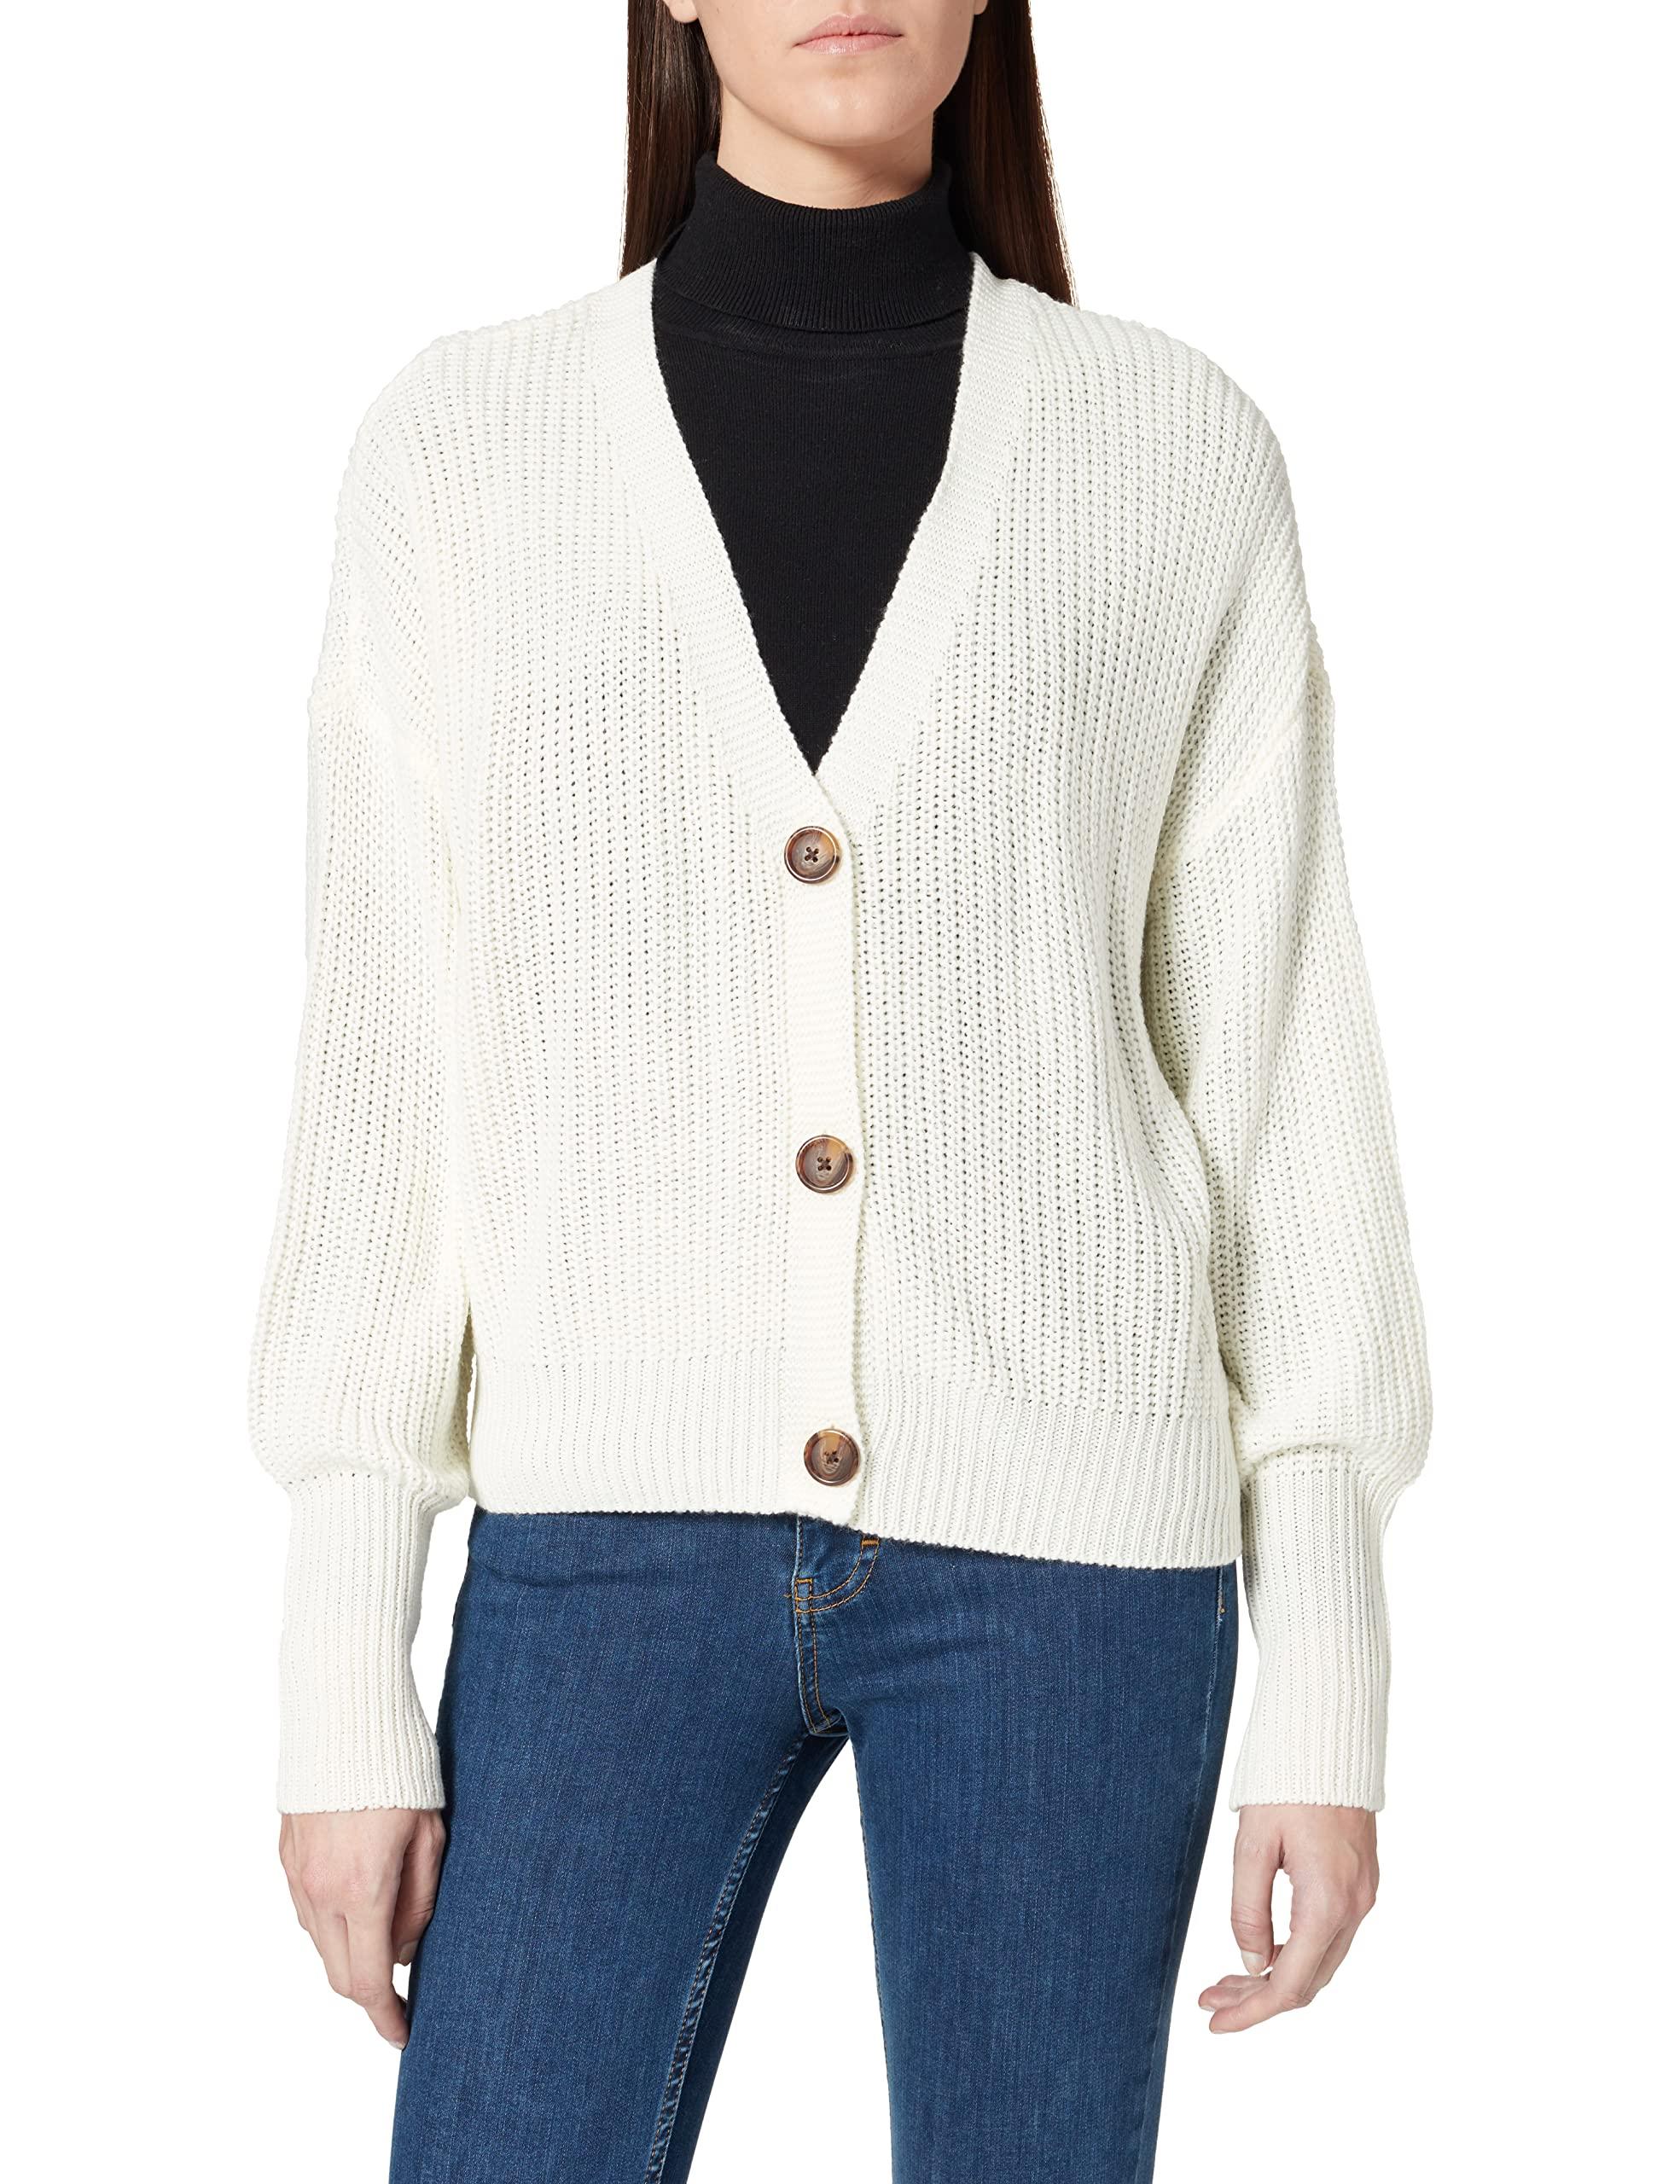 Lyst Moda Cardigan UK V-neck Vmlea Ls in Sweater White | Noos Cuff Vero